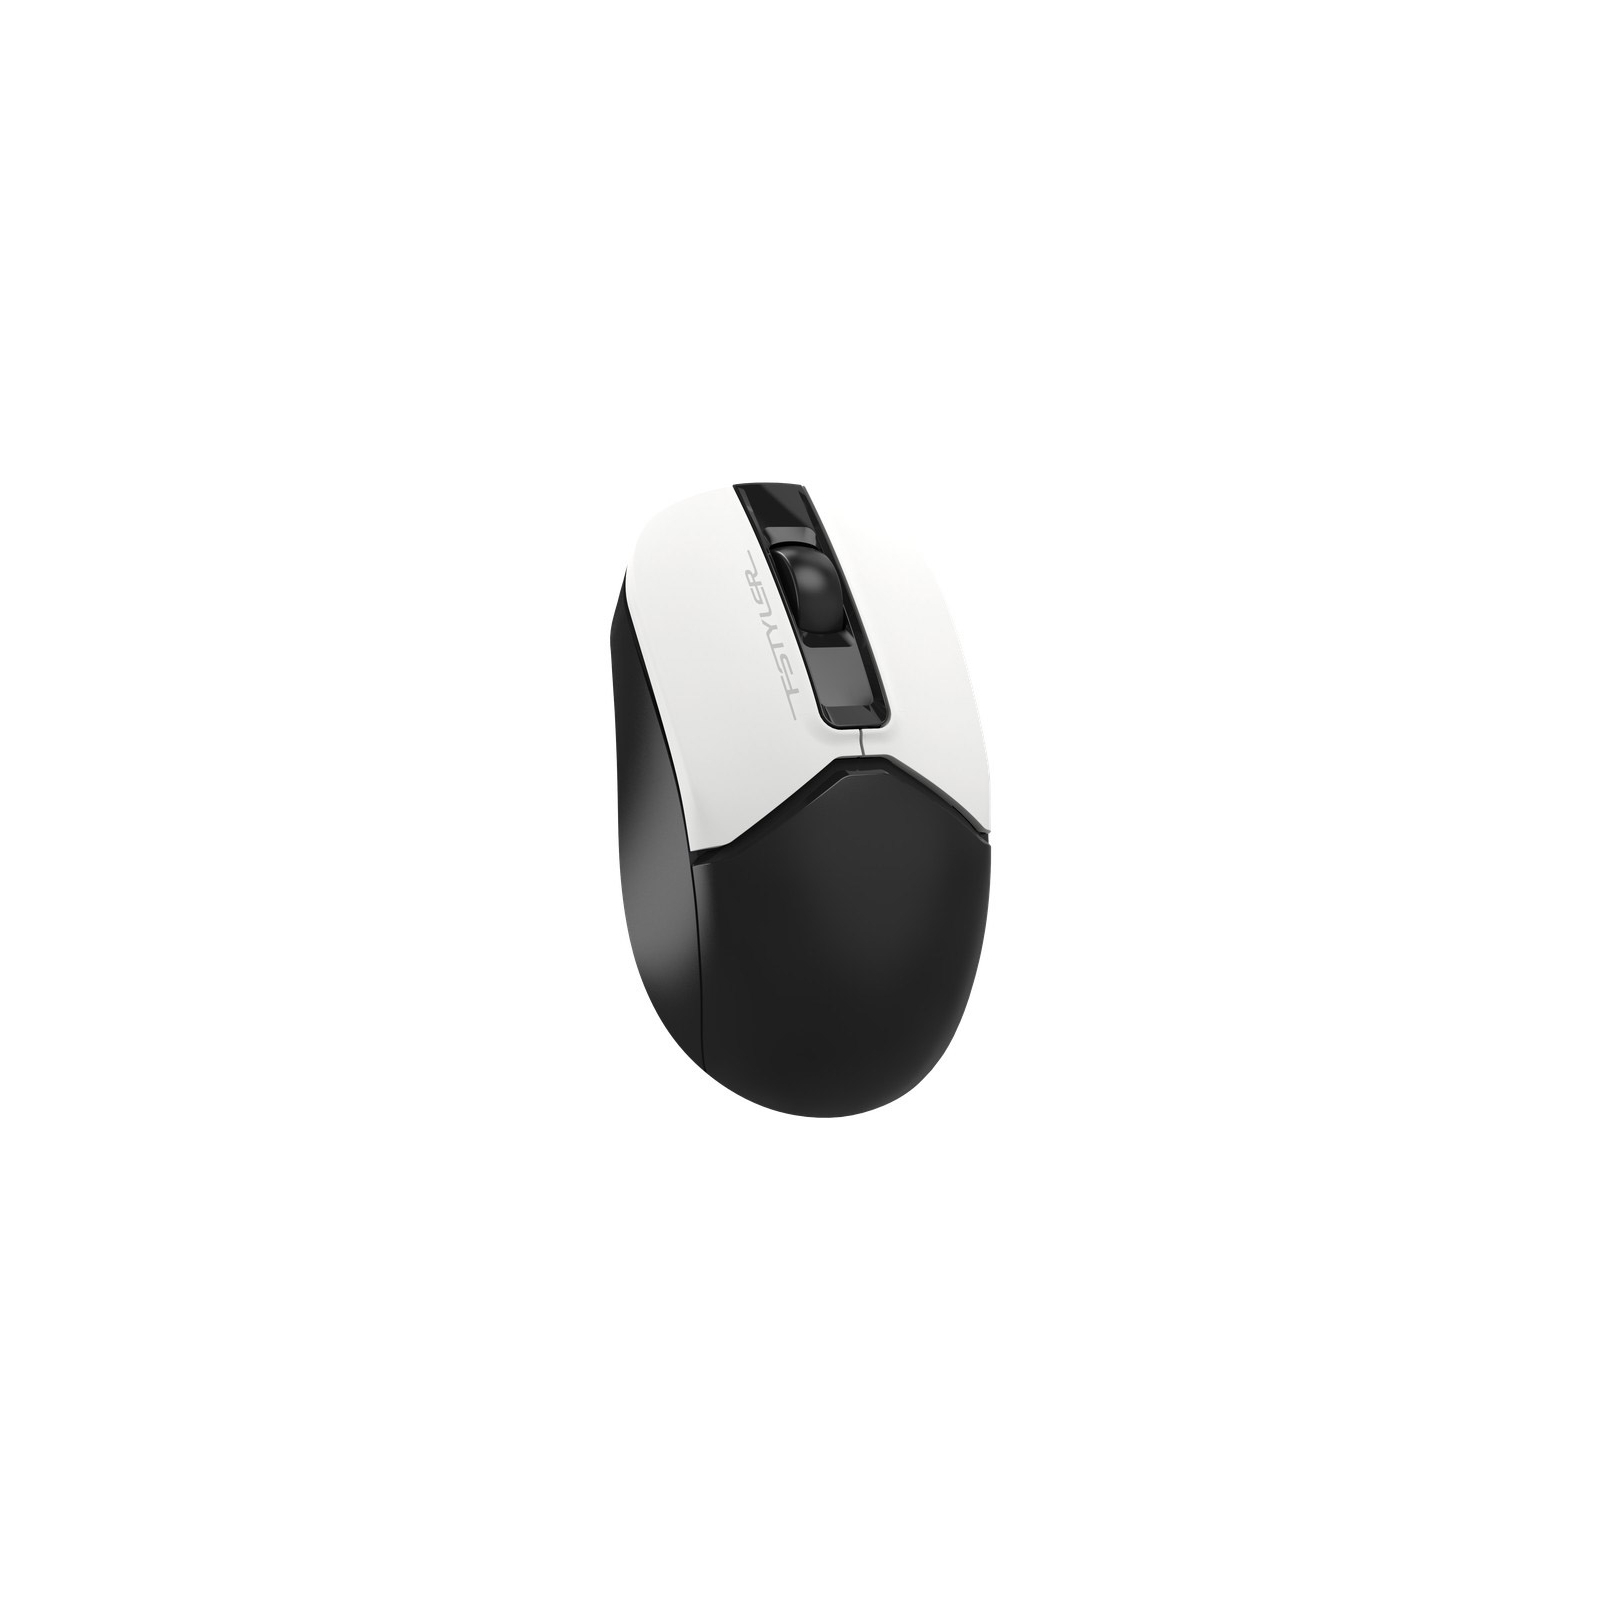 Мышка A4Tech FB12S Wireless/Bluetooth Black (FB12S Black) изображение 8